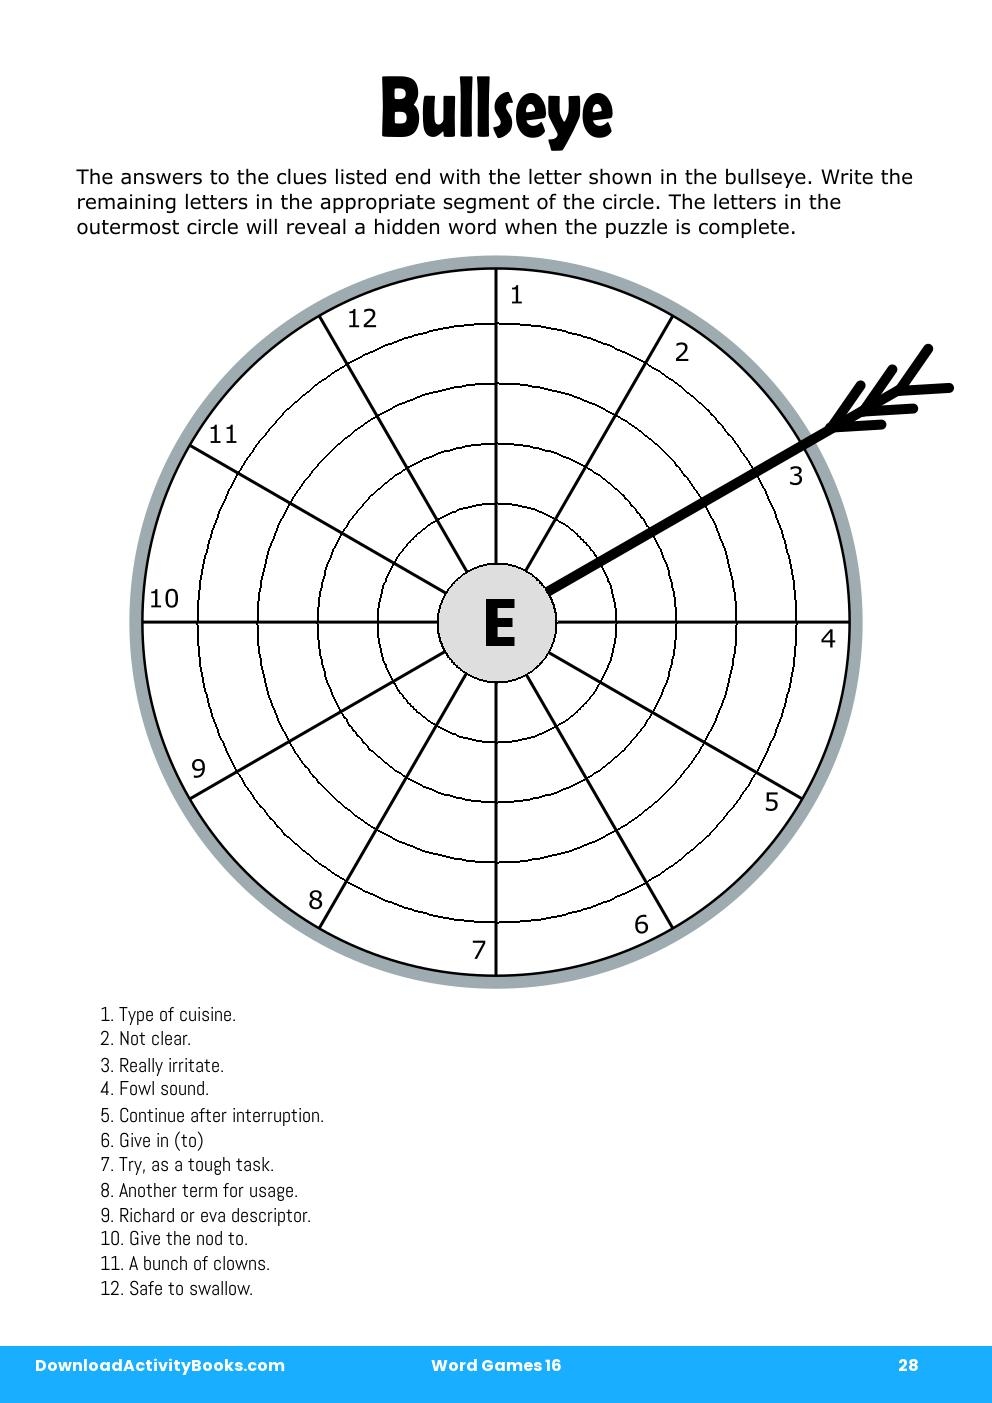 Bullseye in Word Games 16